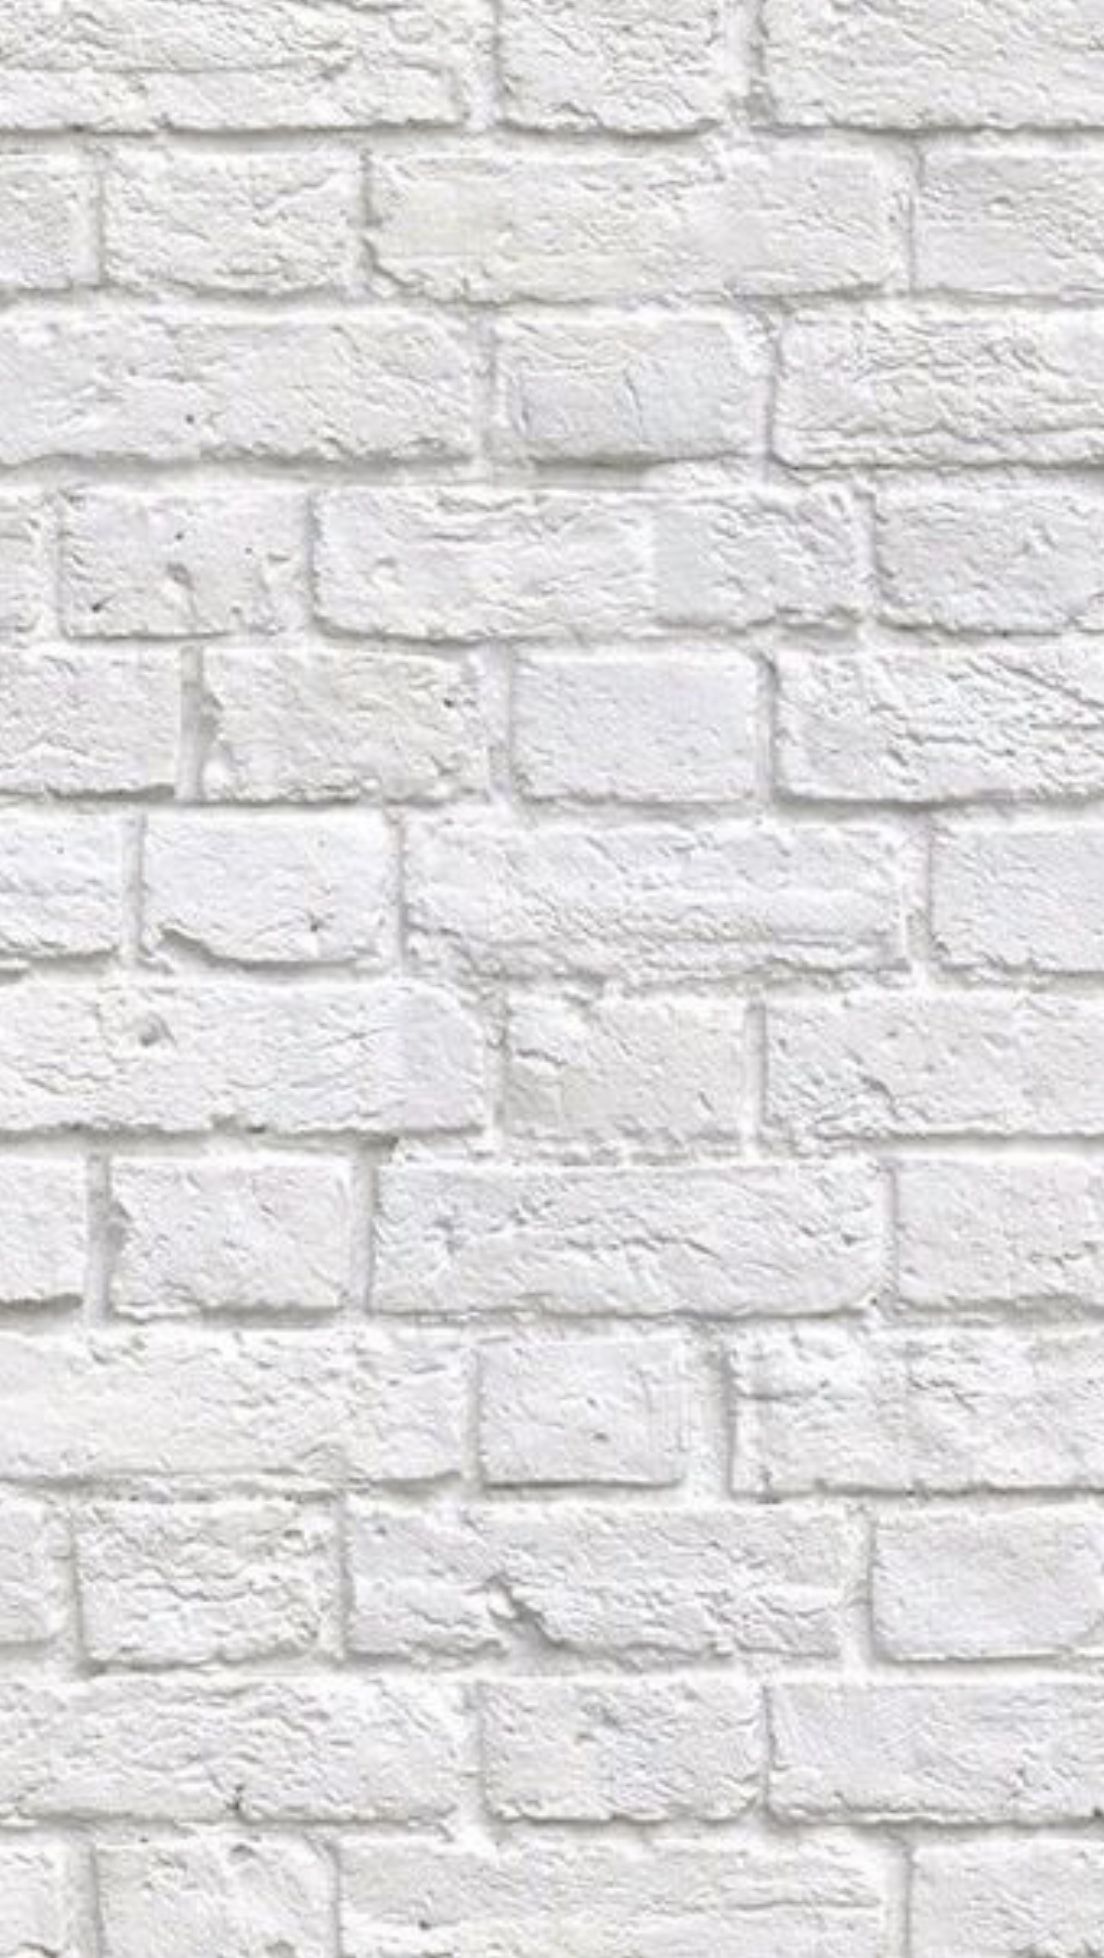 iPhone wallpaper. White brick wallpaper, White wallpaper, Brick wallpaper